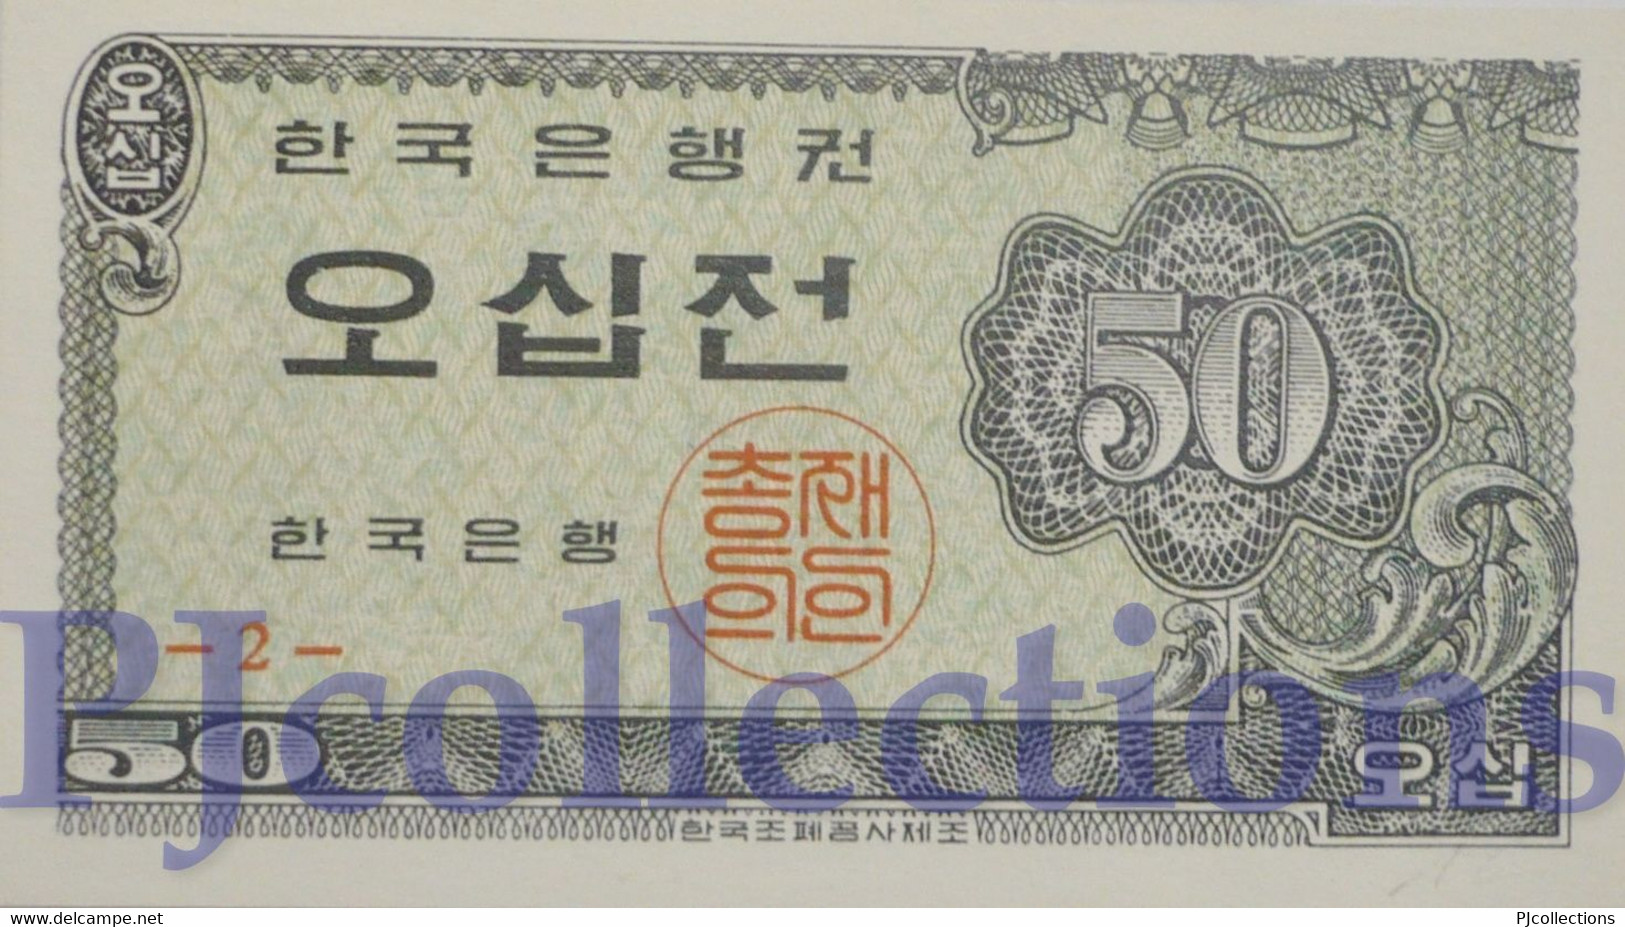 SOUTH KOREA 50 JEON 1962 PICK 29a UNC - Corea Del Sur